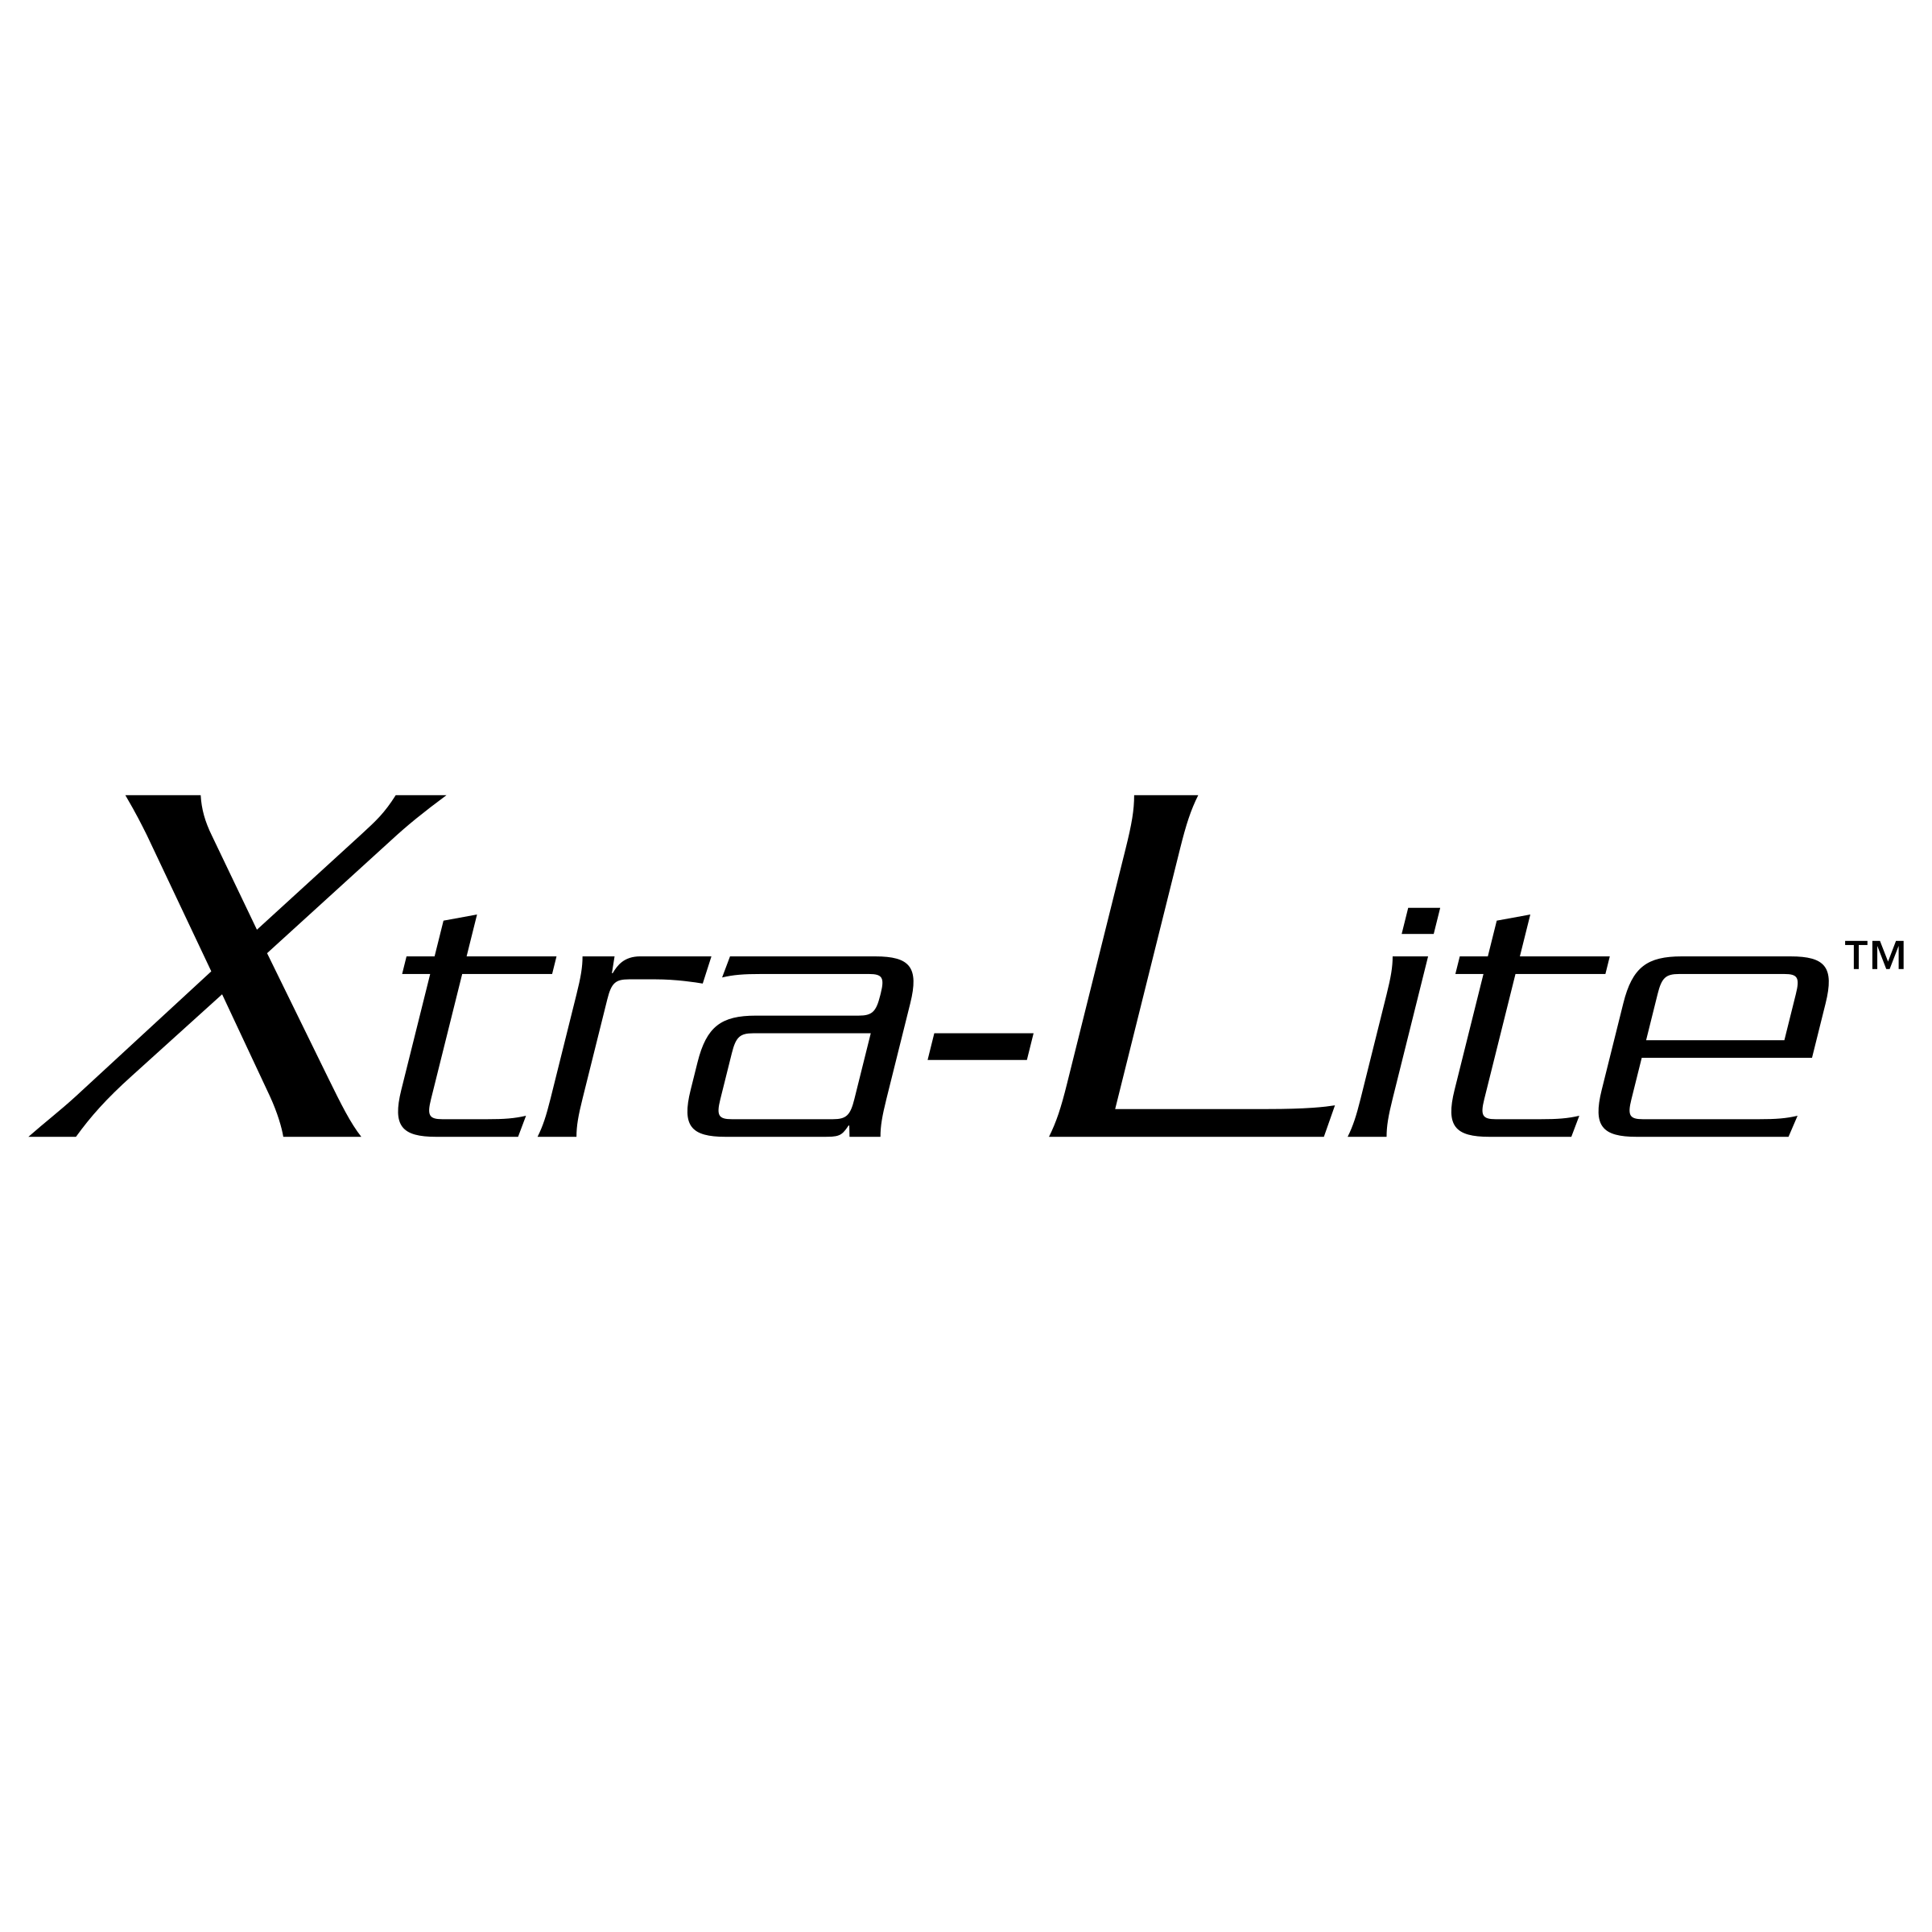 Xenova Logo - Xtra Lite Logo PNG Transparent & SVG Vector - Freebie Supply